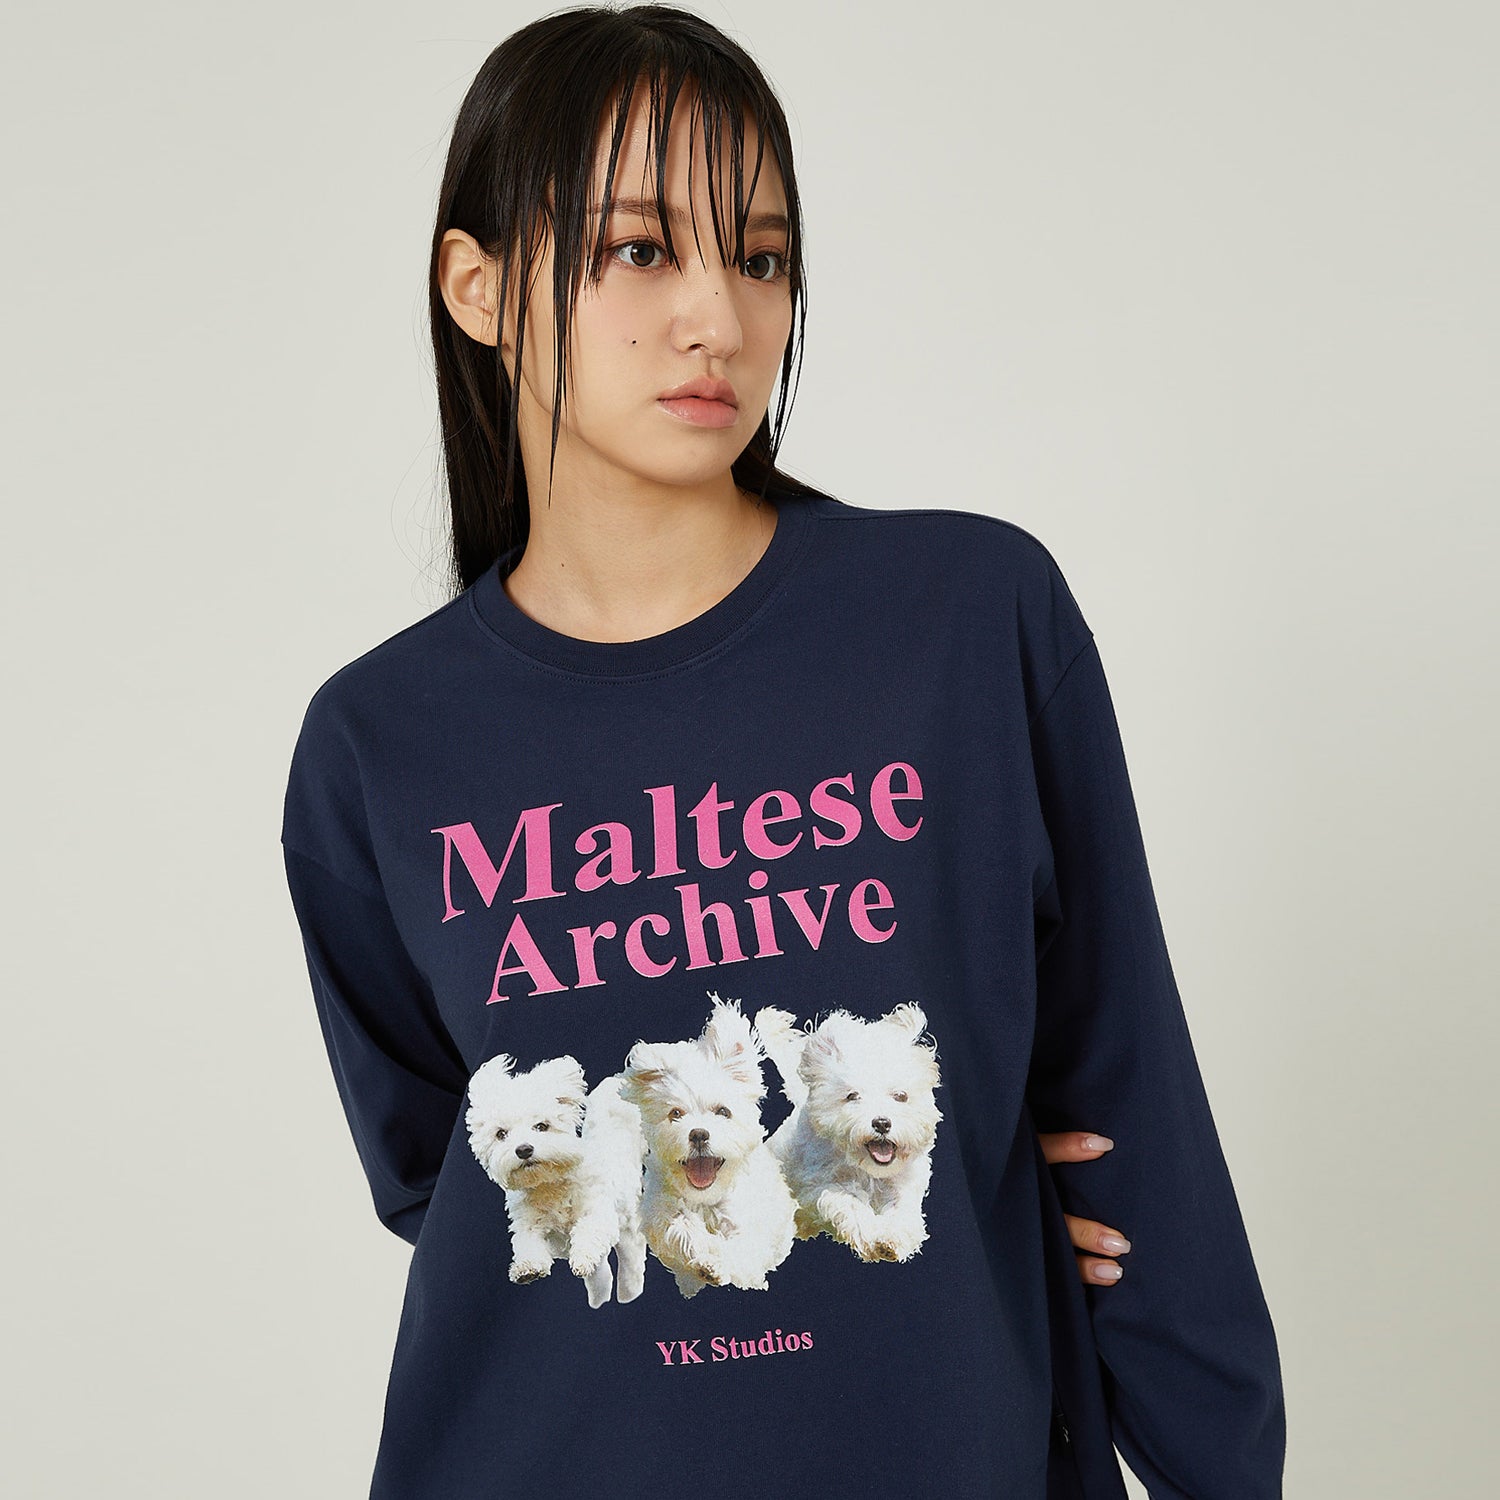 Maltese archive long sleeve tshirt